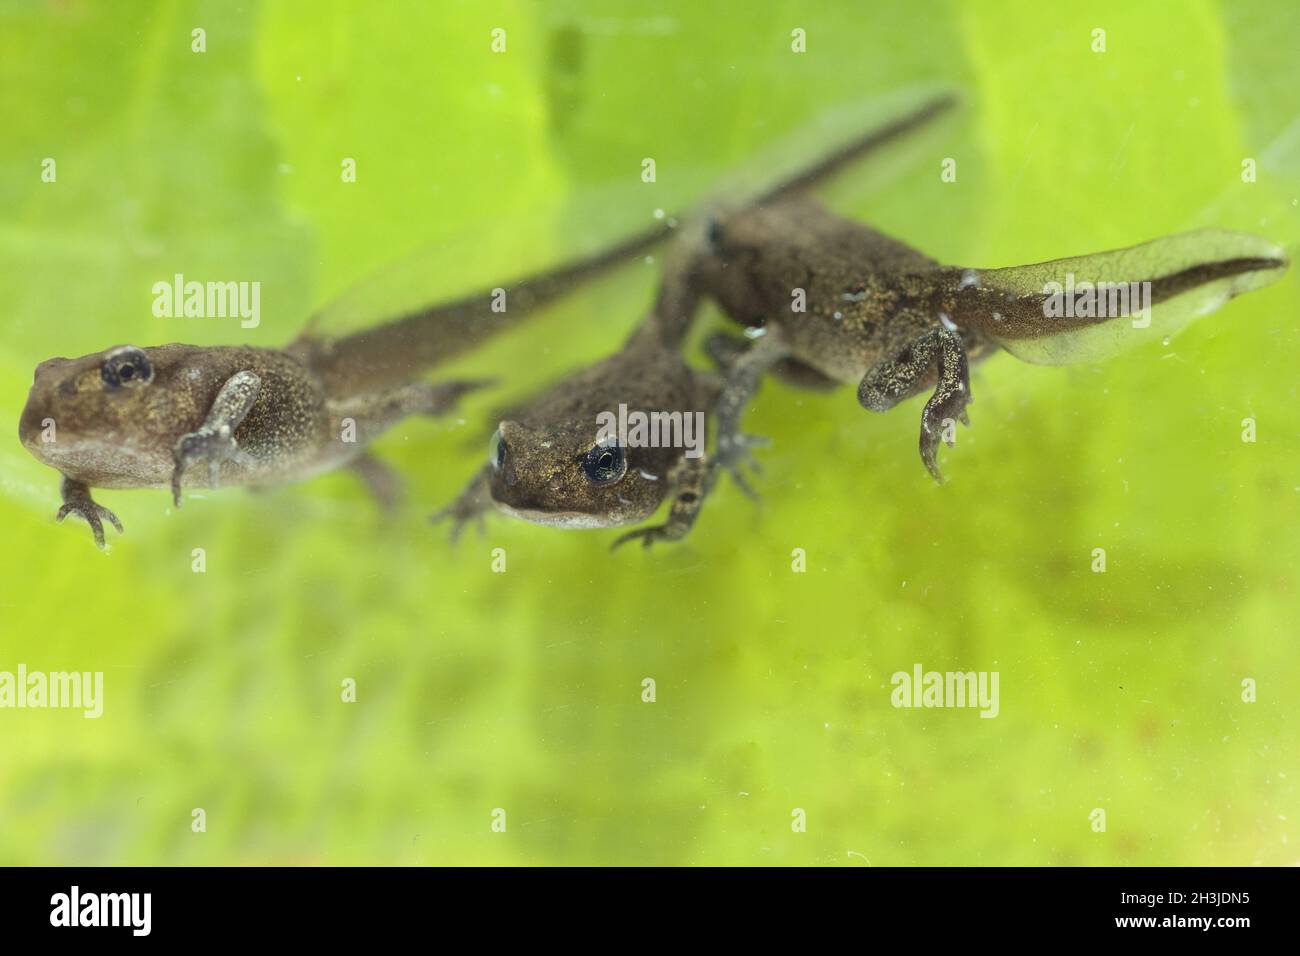 Young frog, young, croet, bufo, bufo, terrestrial croet, Stock Photo